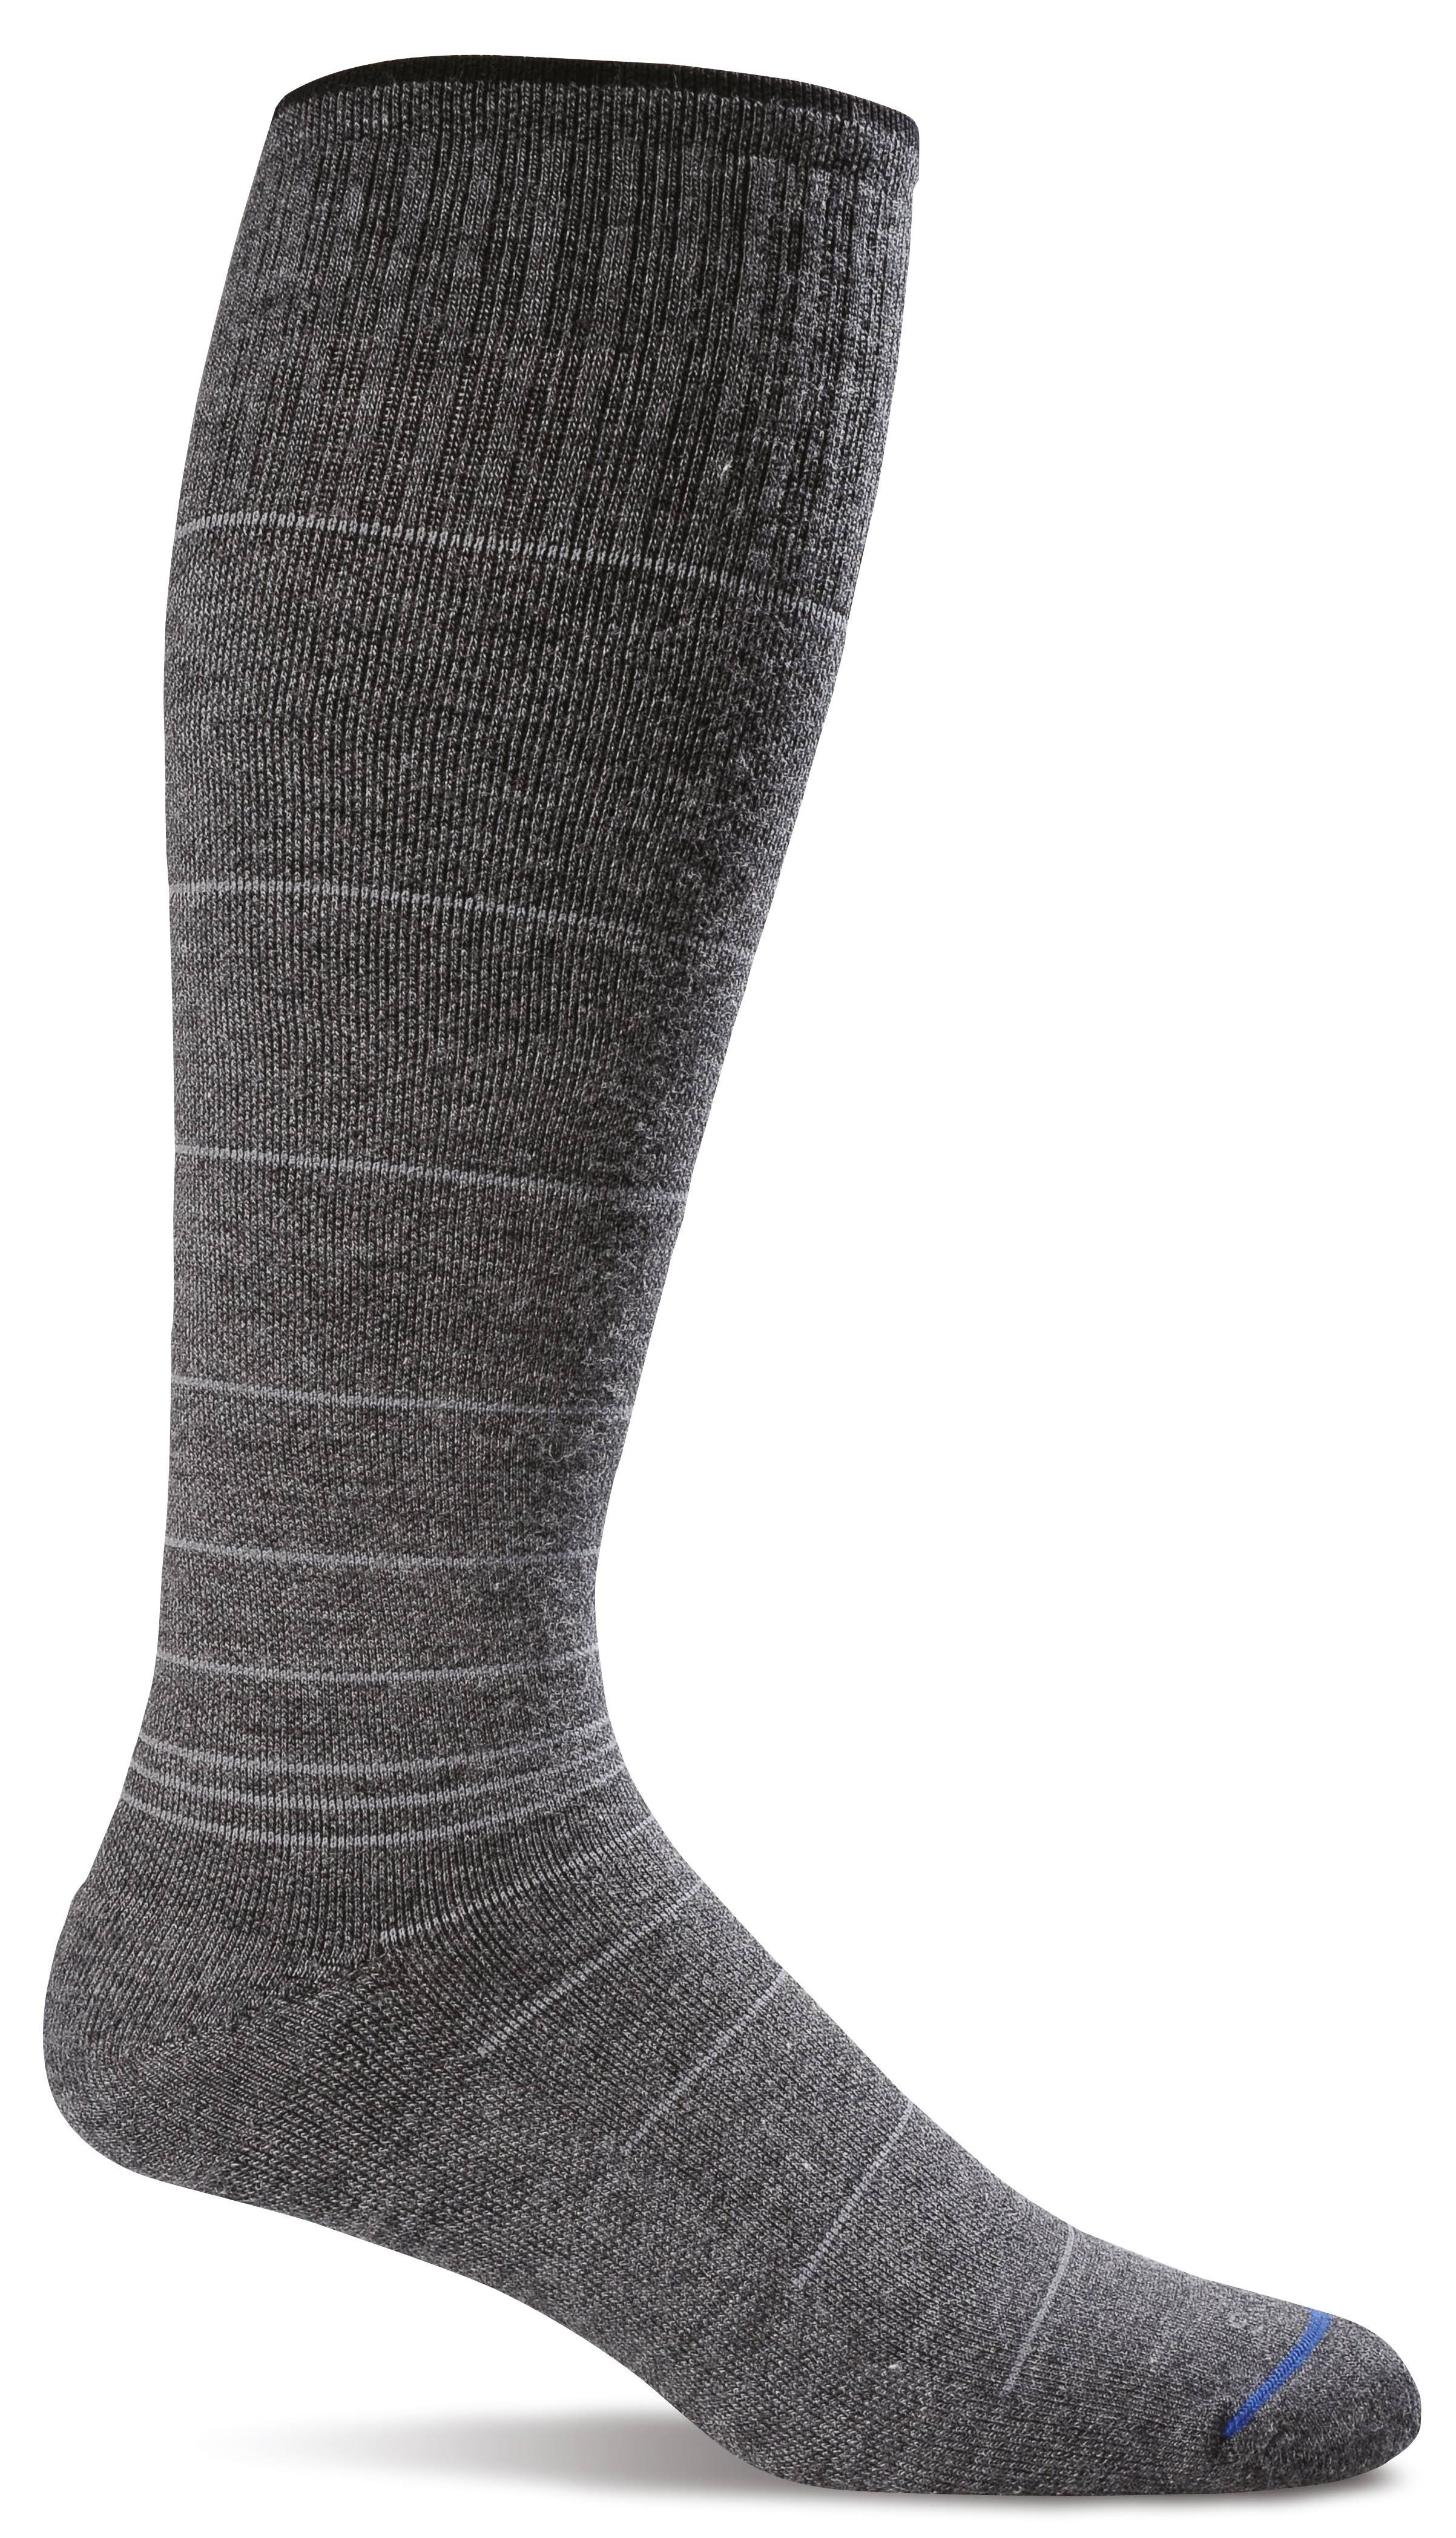 Sockwell Mens Circulator Compression Socks - Medium-Large, Charcoal